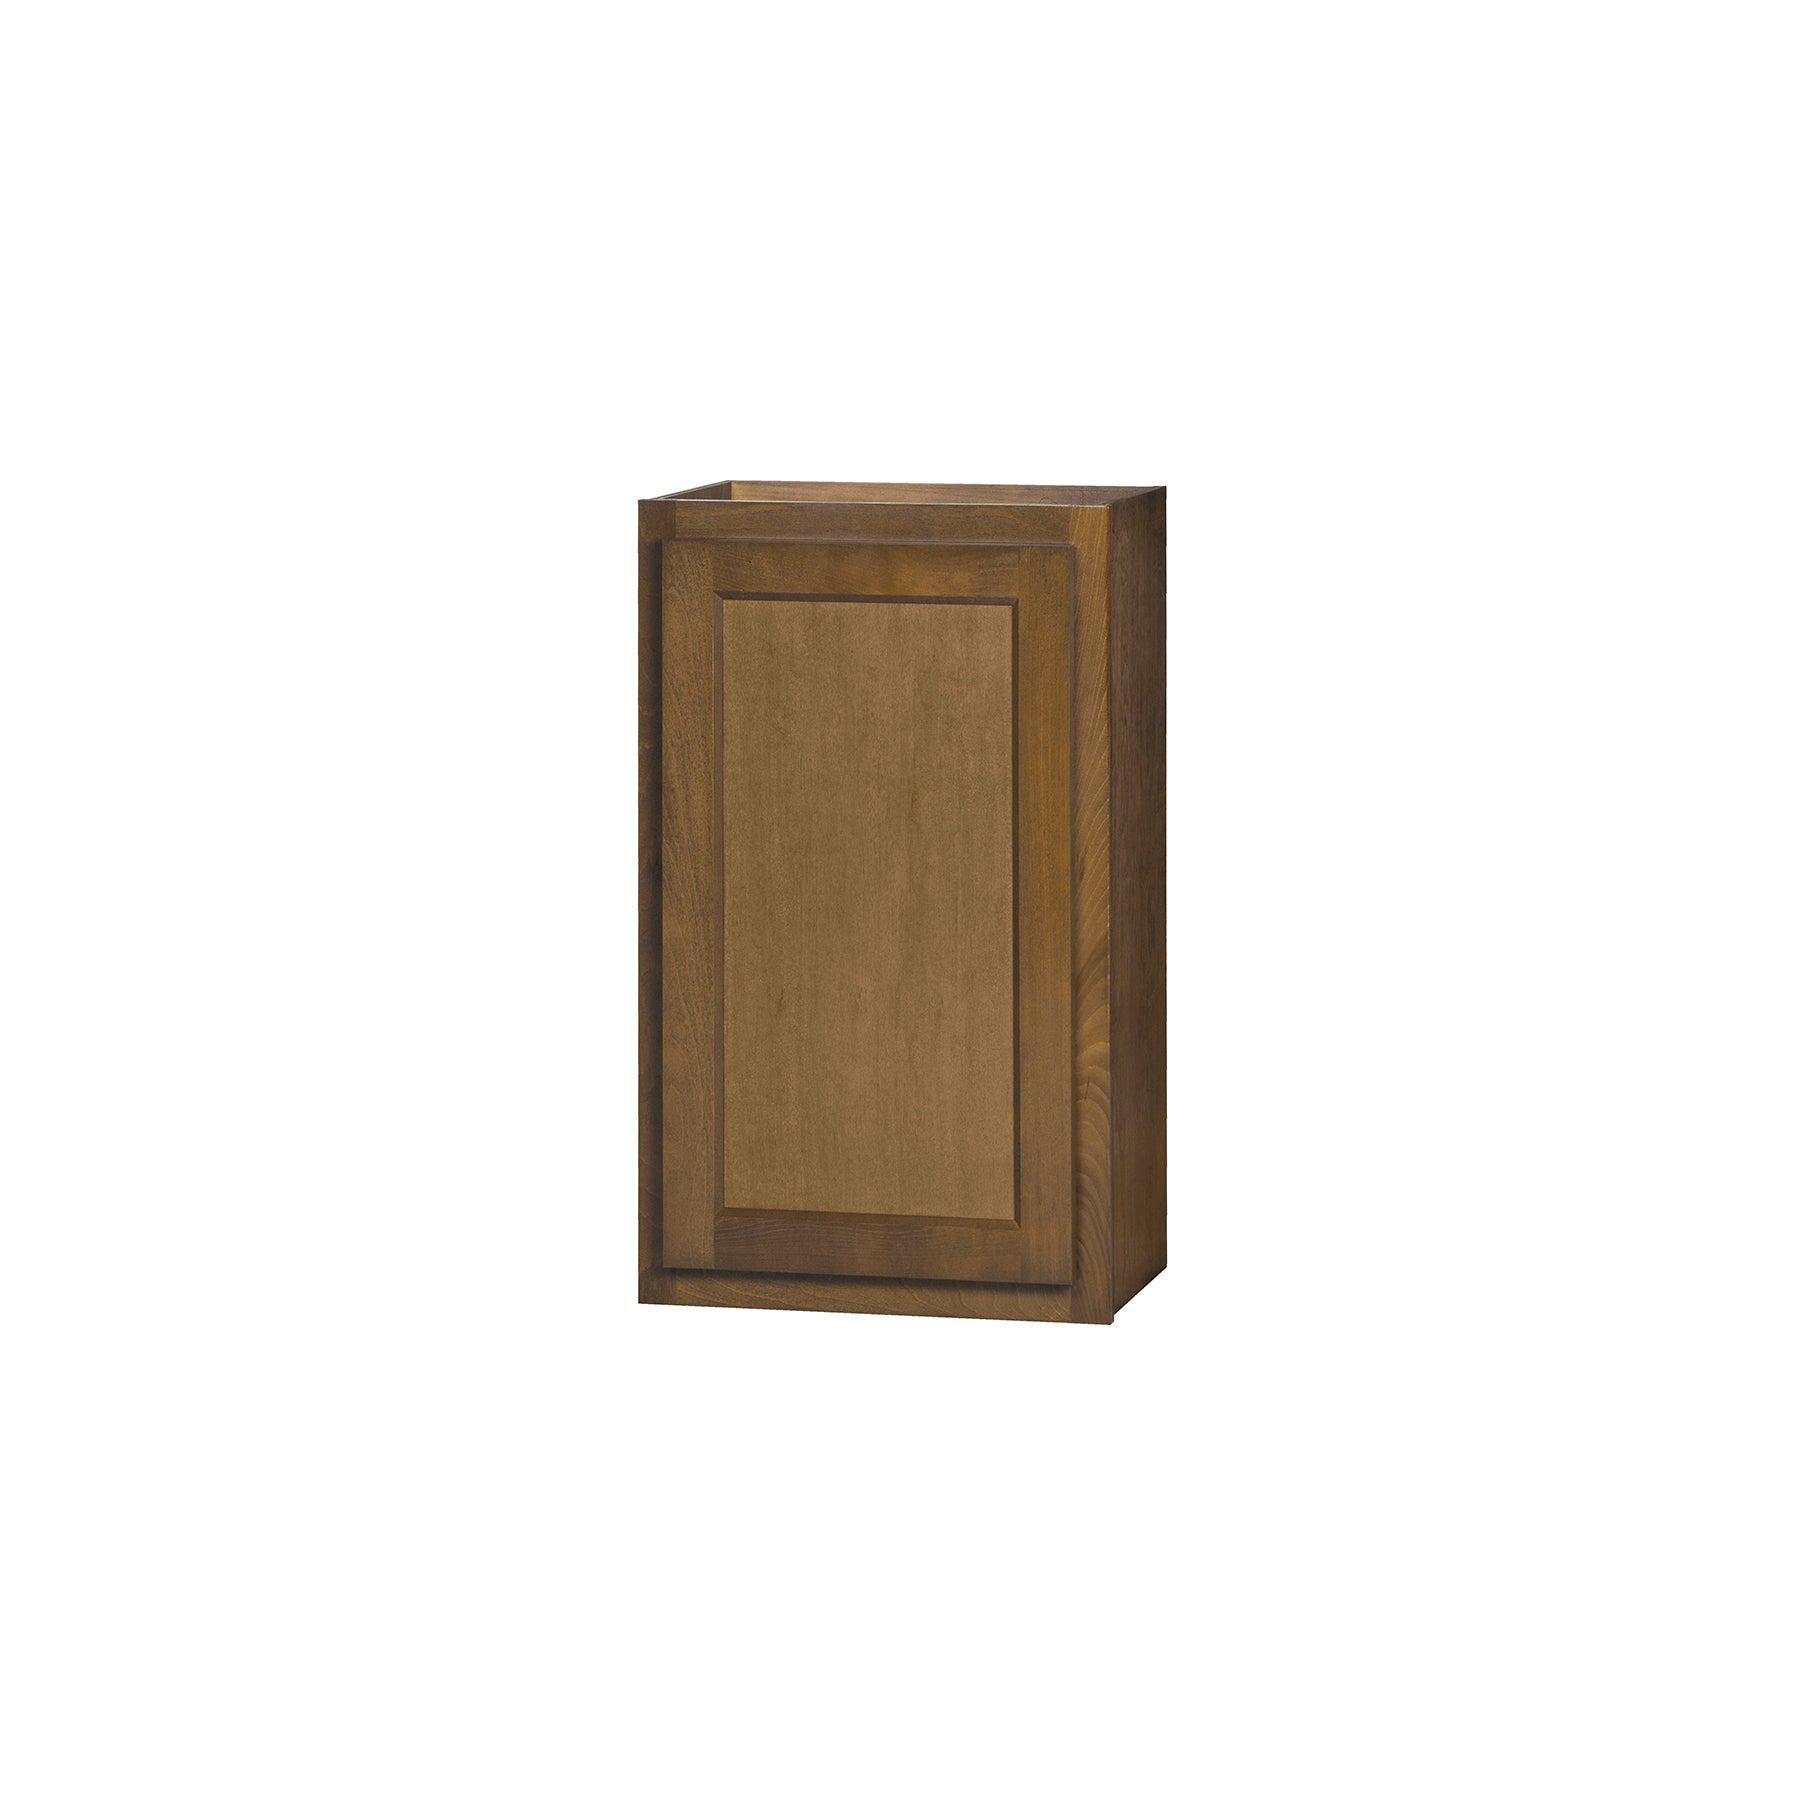 30 inch Wall Cabinets - Single Door - Warmwood Shaker - 18 Inch W x 30 Inch H x 12 Inch D